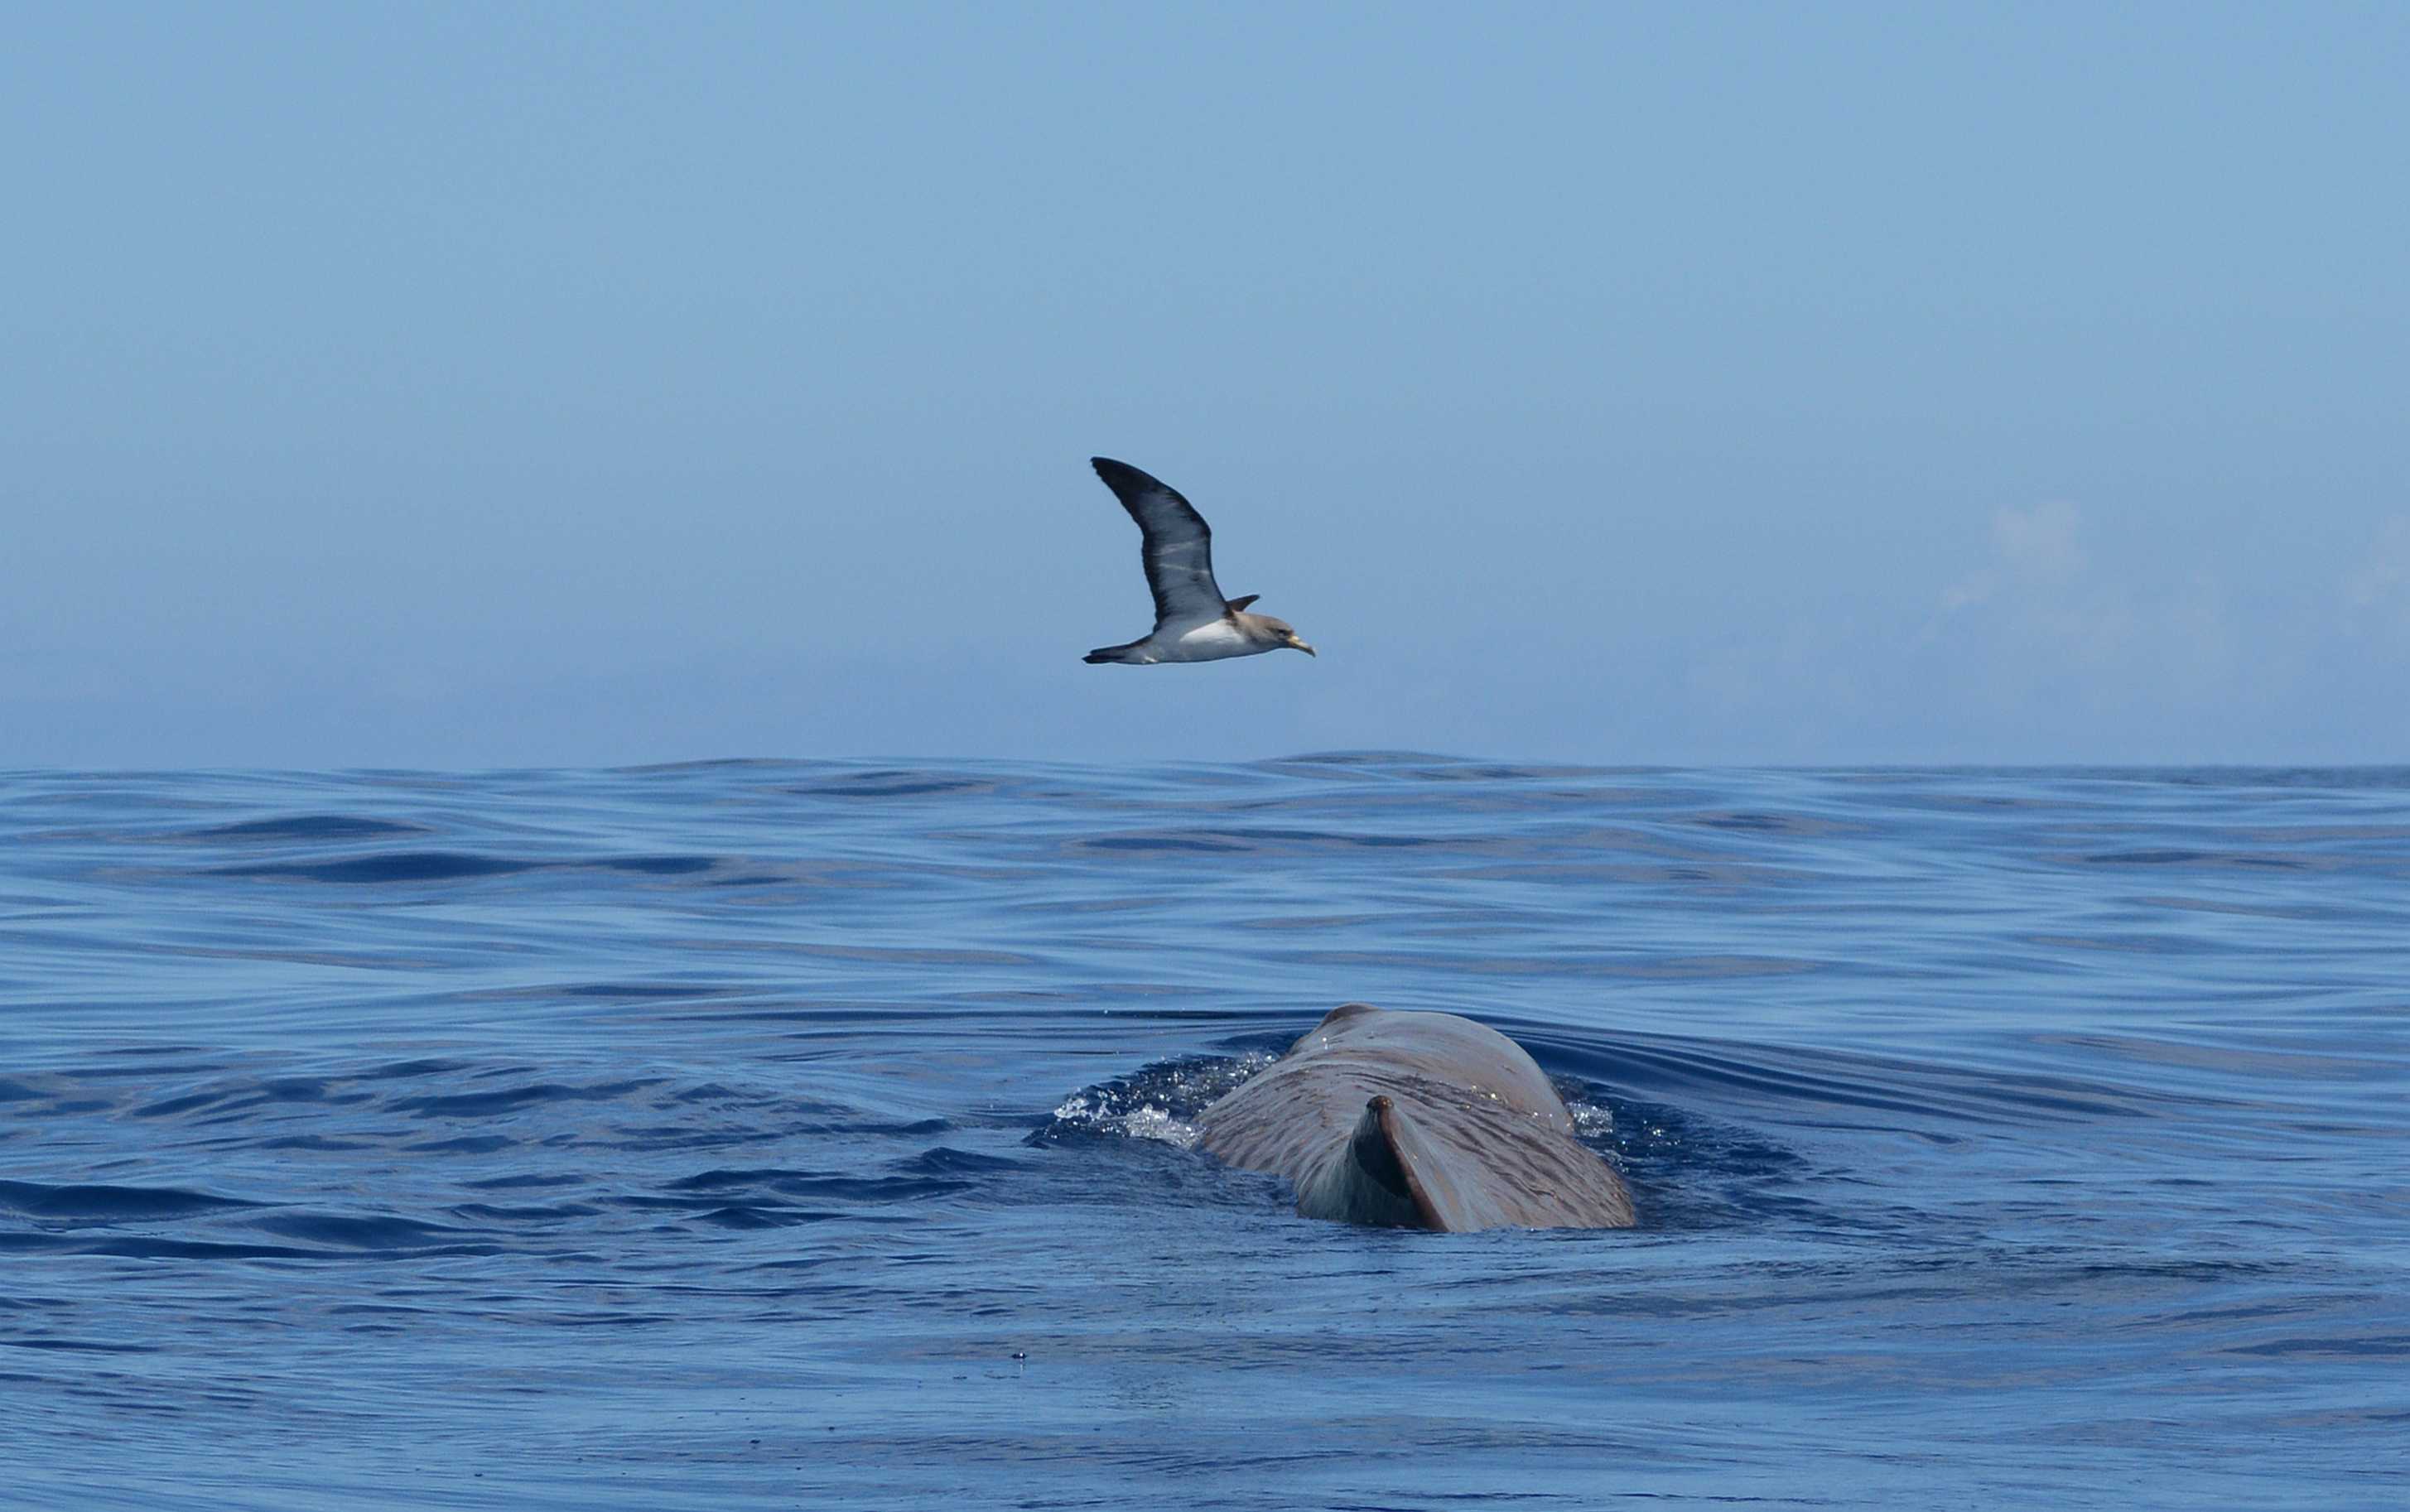 Azores Whale Lab - Cetacean Ecology Group